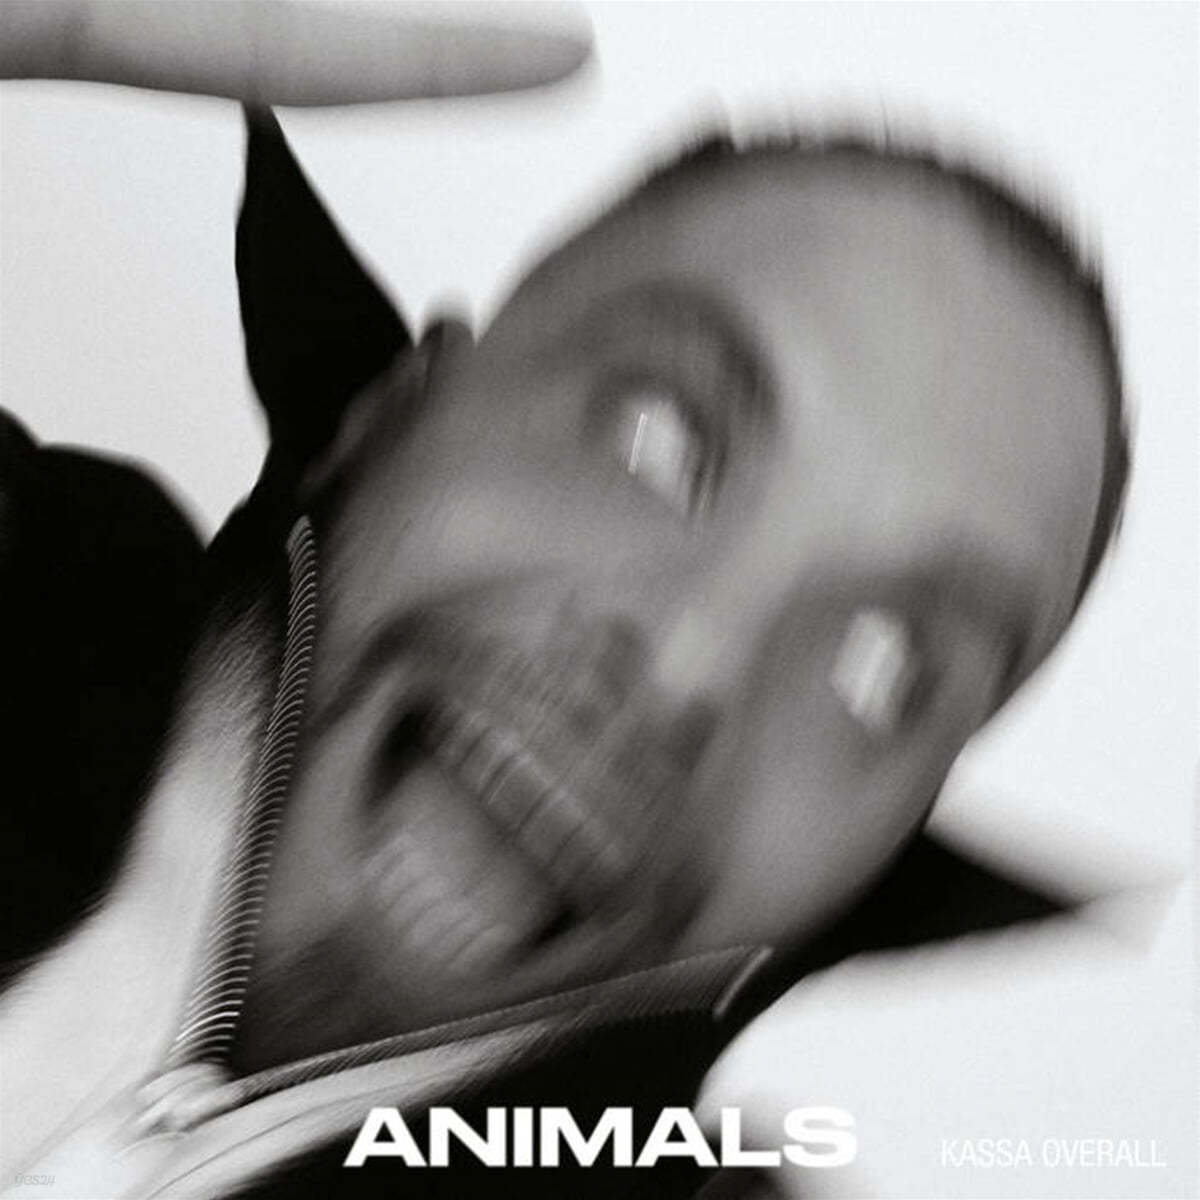 Kassa Overall (카사 오버올) - ANIMALS 